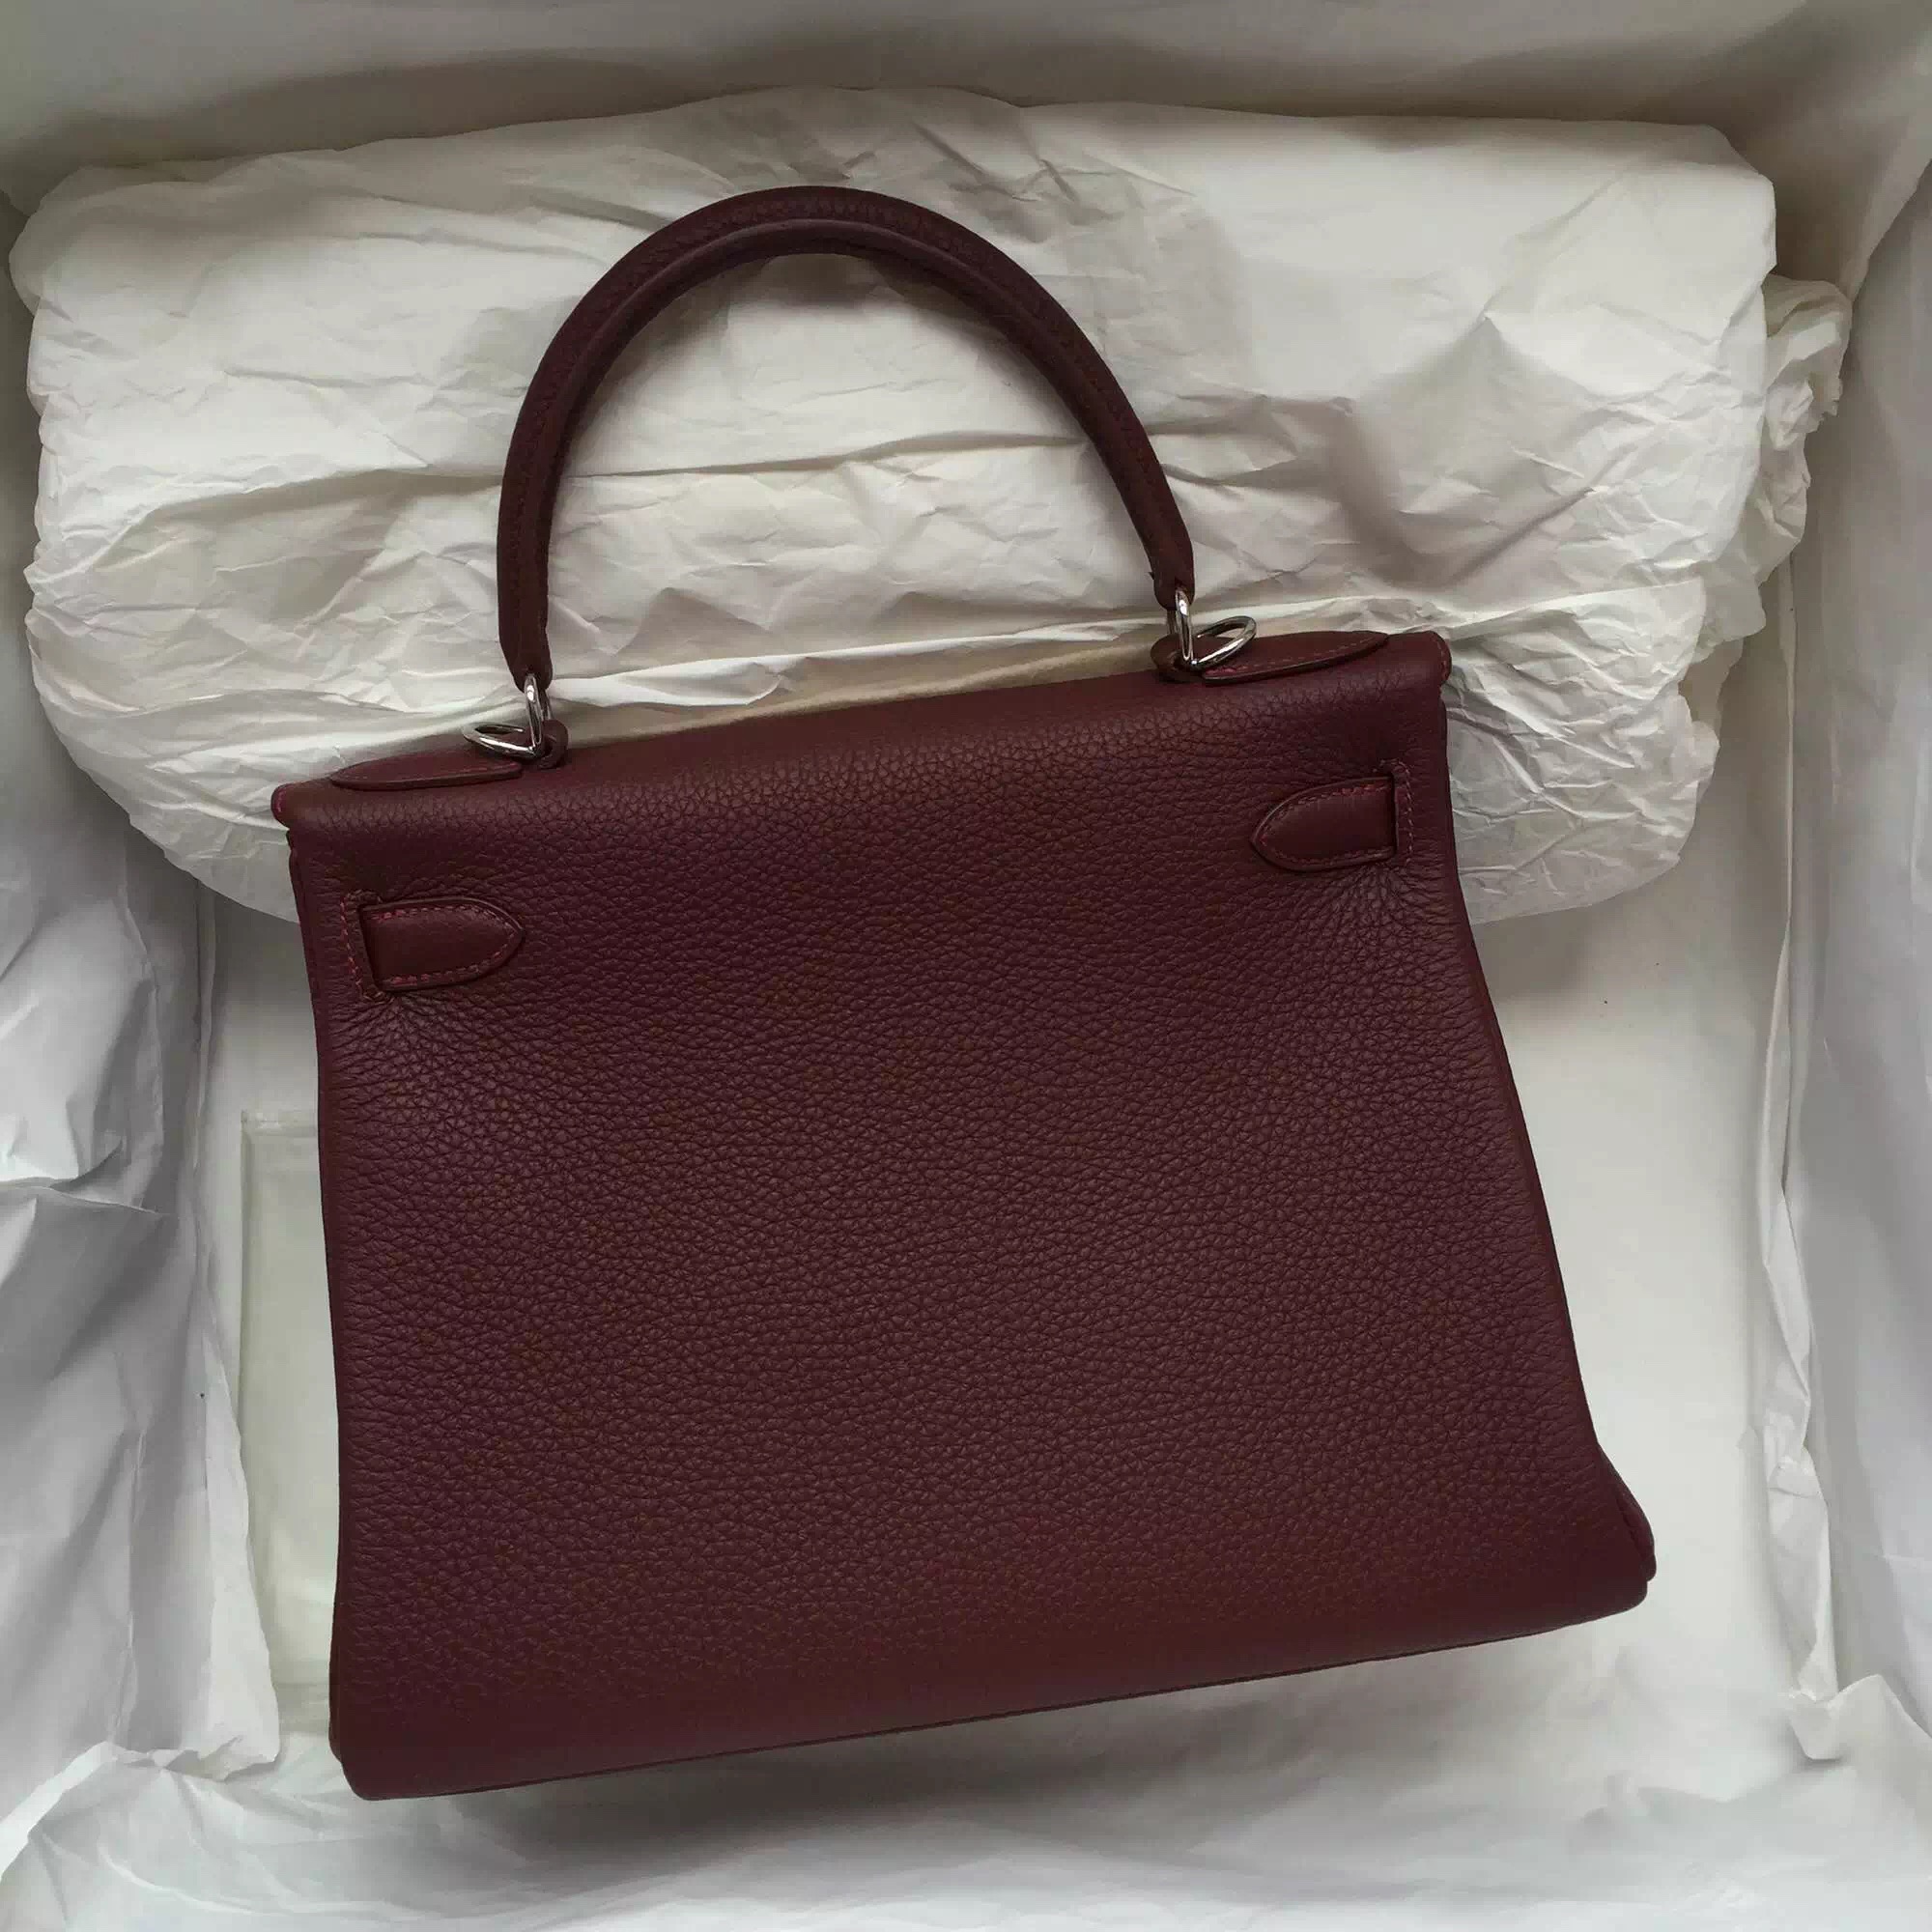 Elegant Hermes Kelly Bag 28CM in B5 Ruby Red France Togo Leather Silver Herdware Handbag